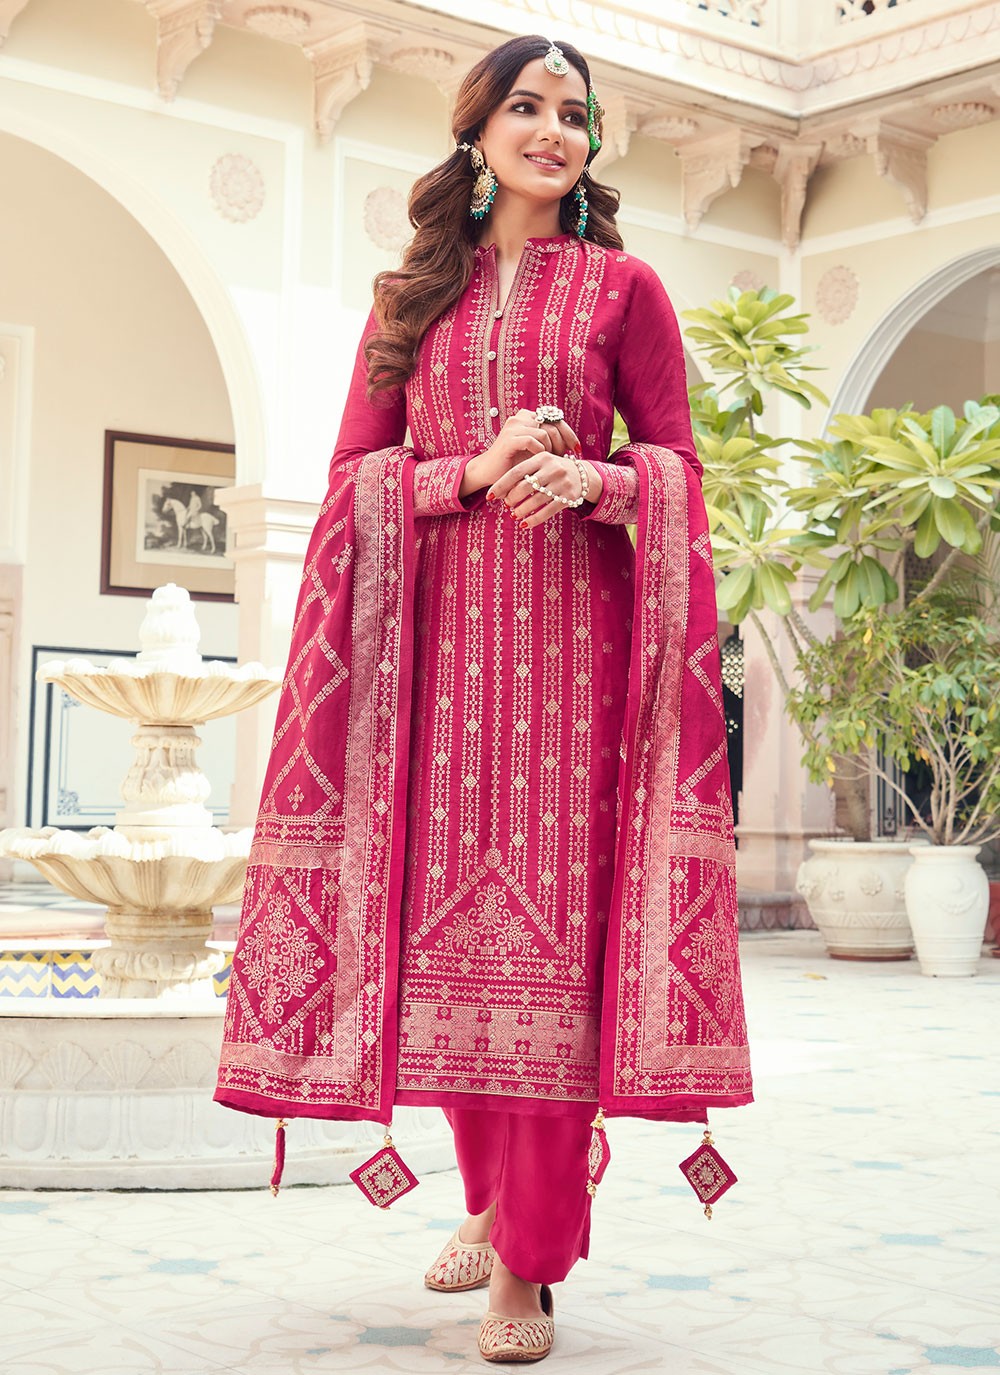 Jasmin Bhasin Prodigious Pink Designer Pakistani Suit